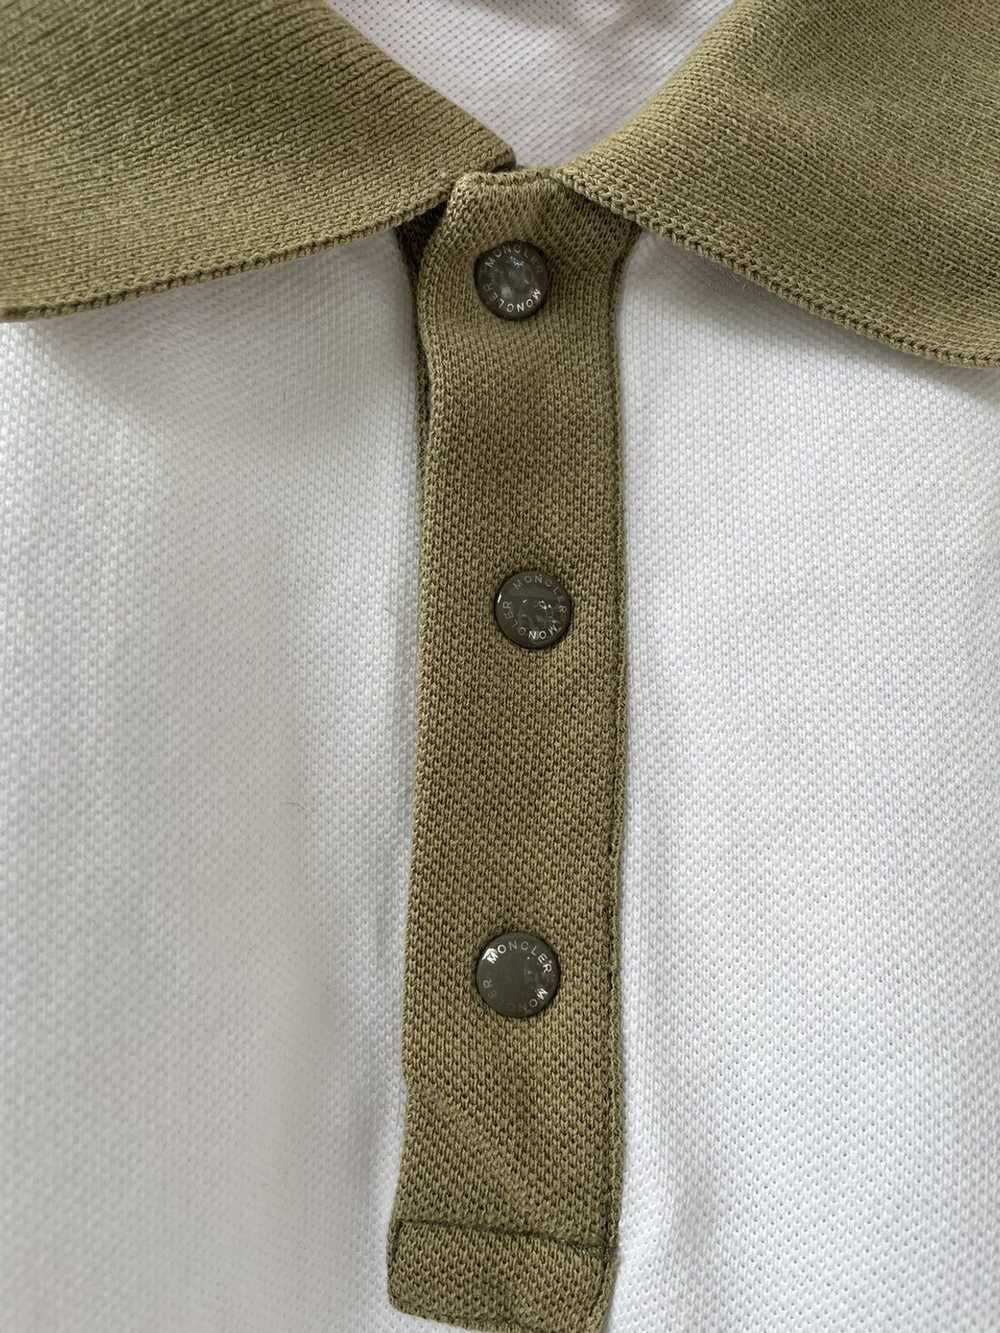 Moncler Moncler Embroidered Polo Shirt - image 4